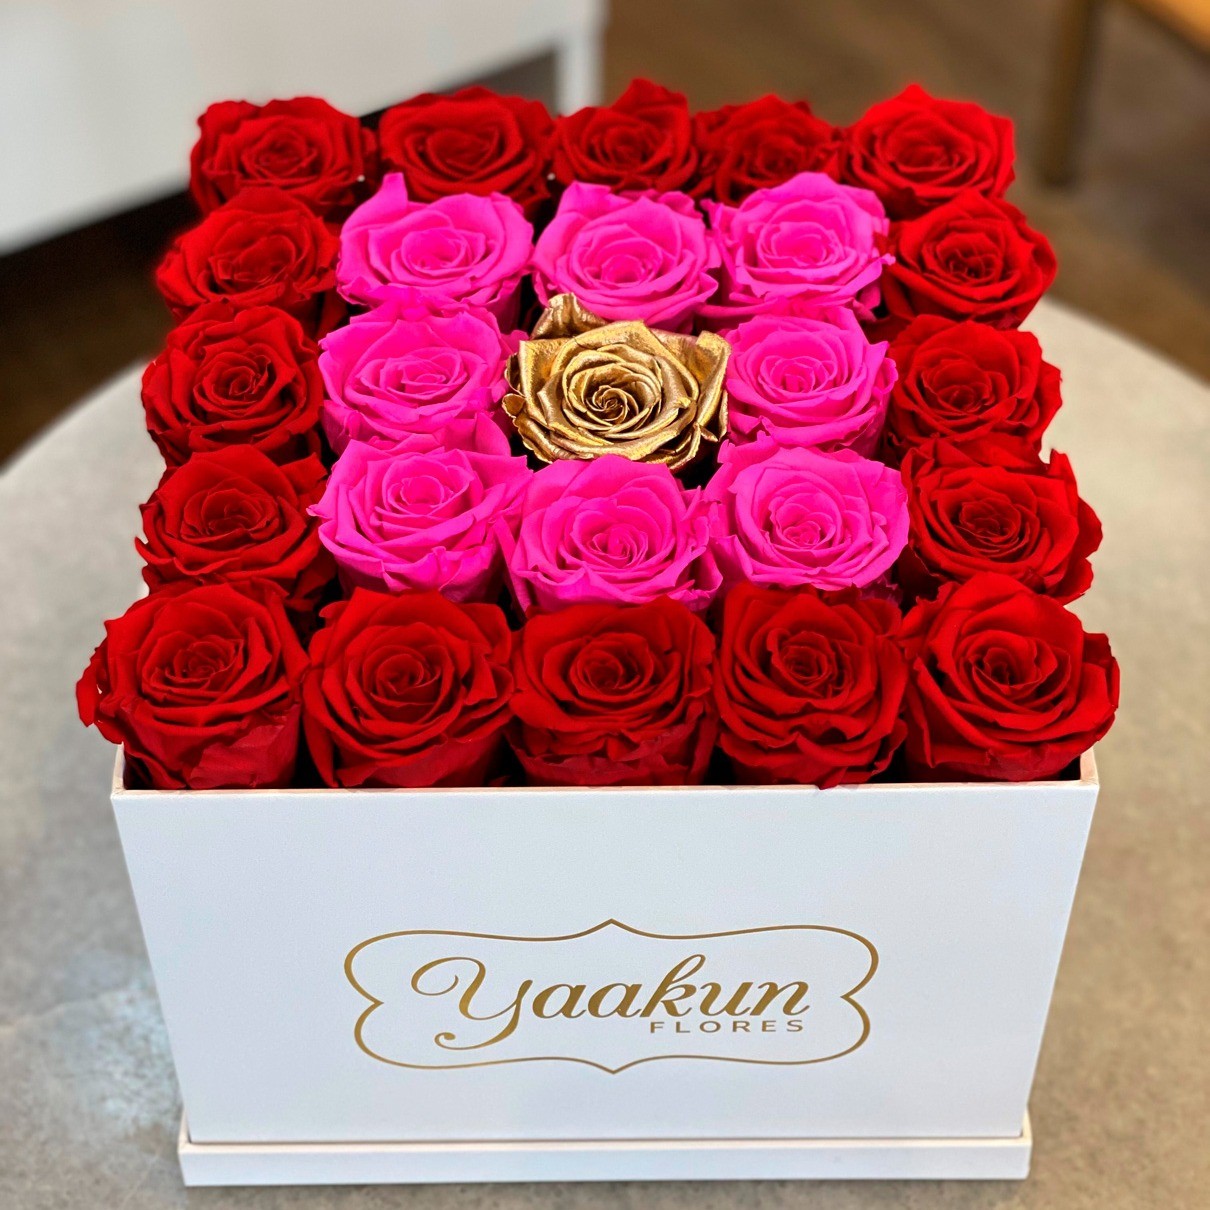 Rosas eternas en caja octagonal lila, rosa palo & pink